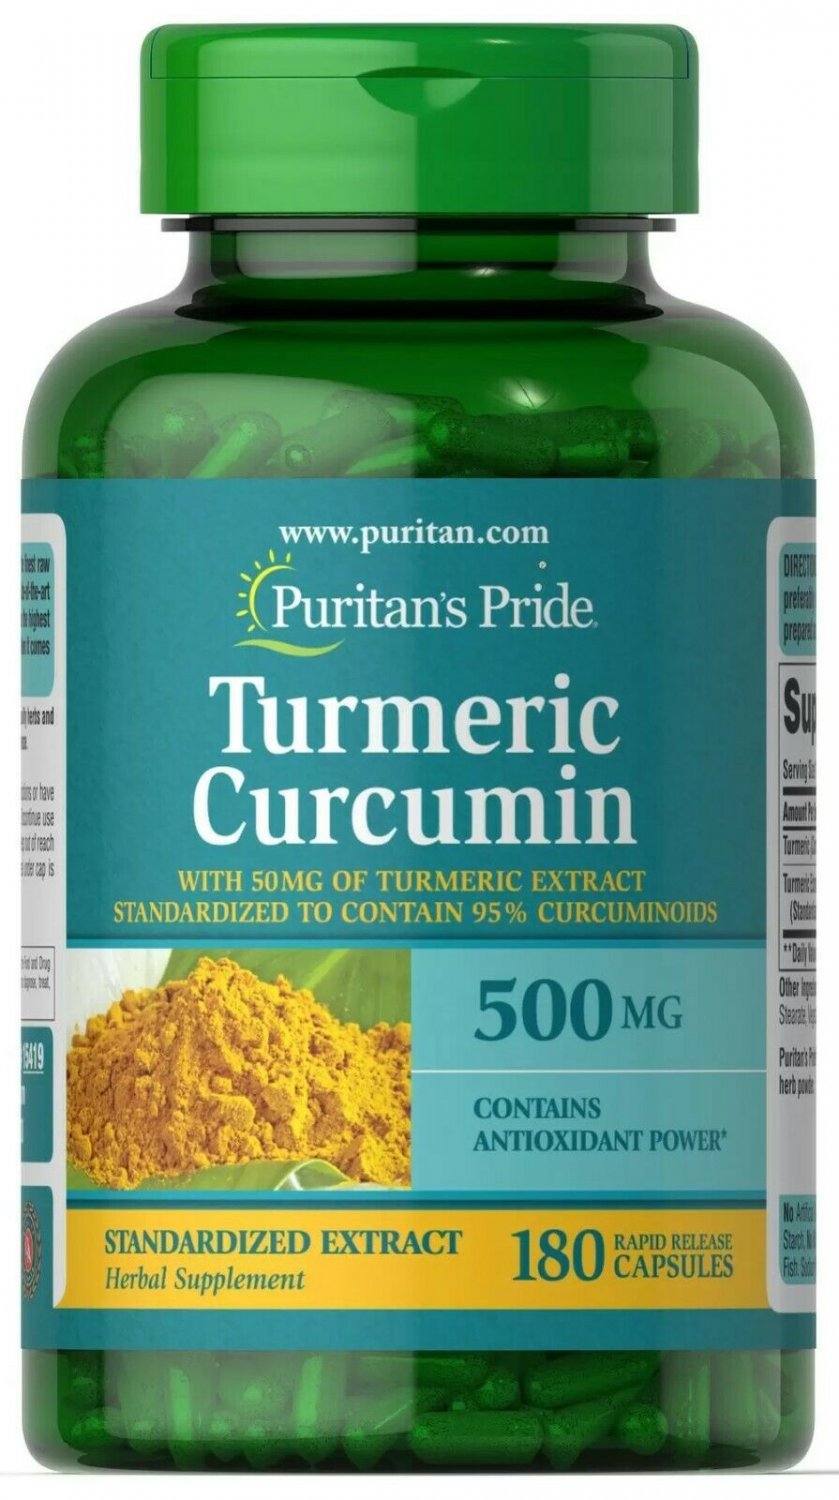 Puritan's Pride Turmeric Curcumin 500 mg 180 Rapid Release Capsules